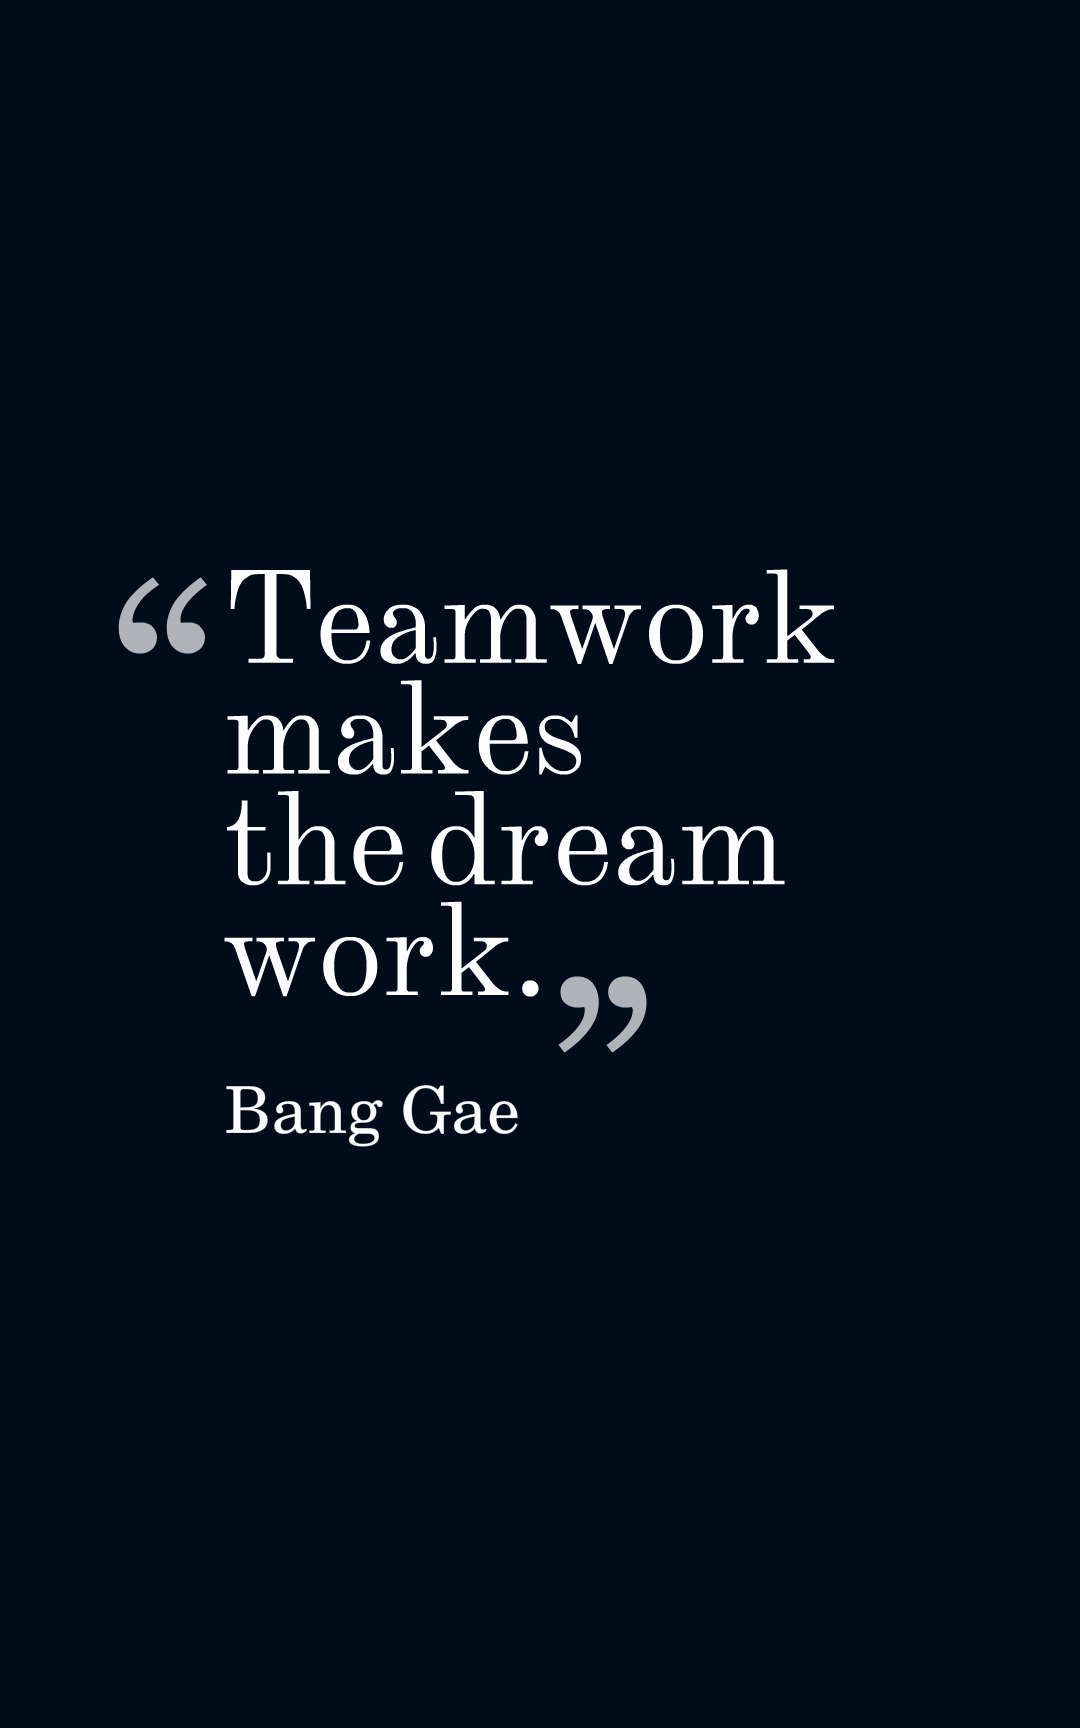 Teamwork makes the dream work.